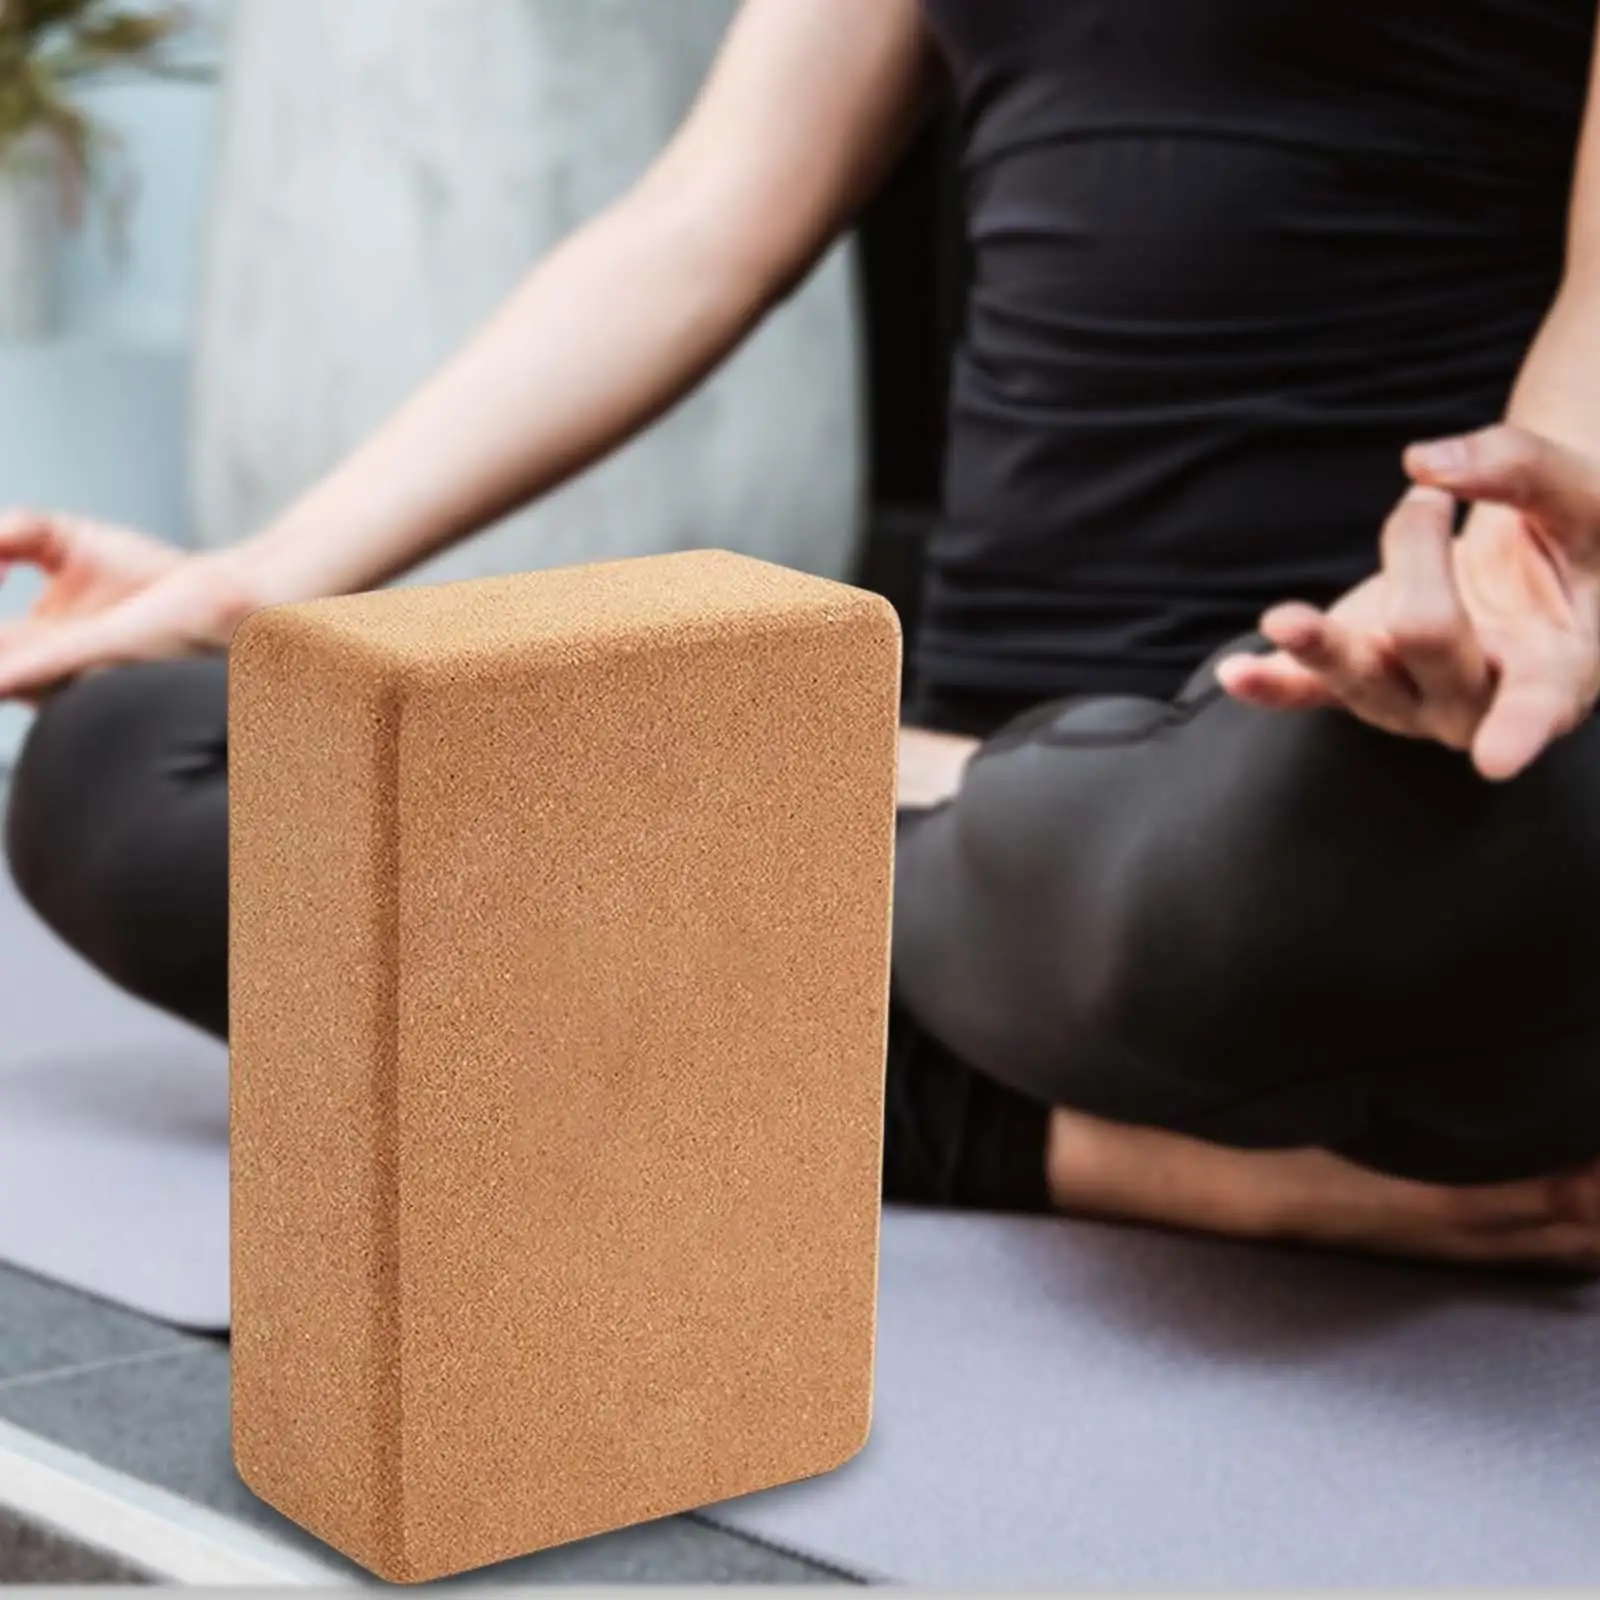 Cork Yoga Brick Exercise Brick Body Building Squat Wedge Block Lightweight Meditation for Gym Weightlifting Stretching Yoga Home